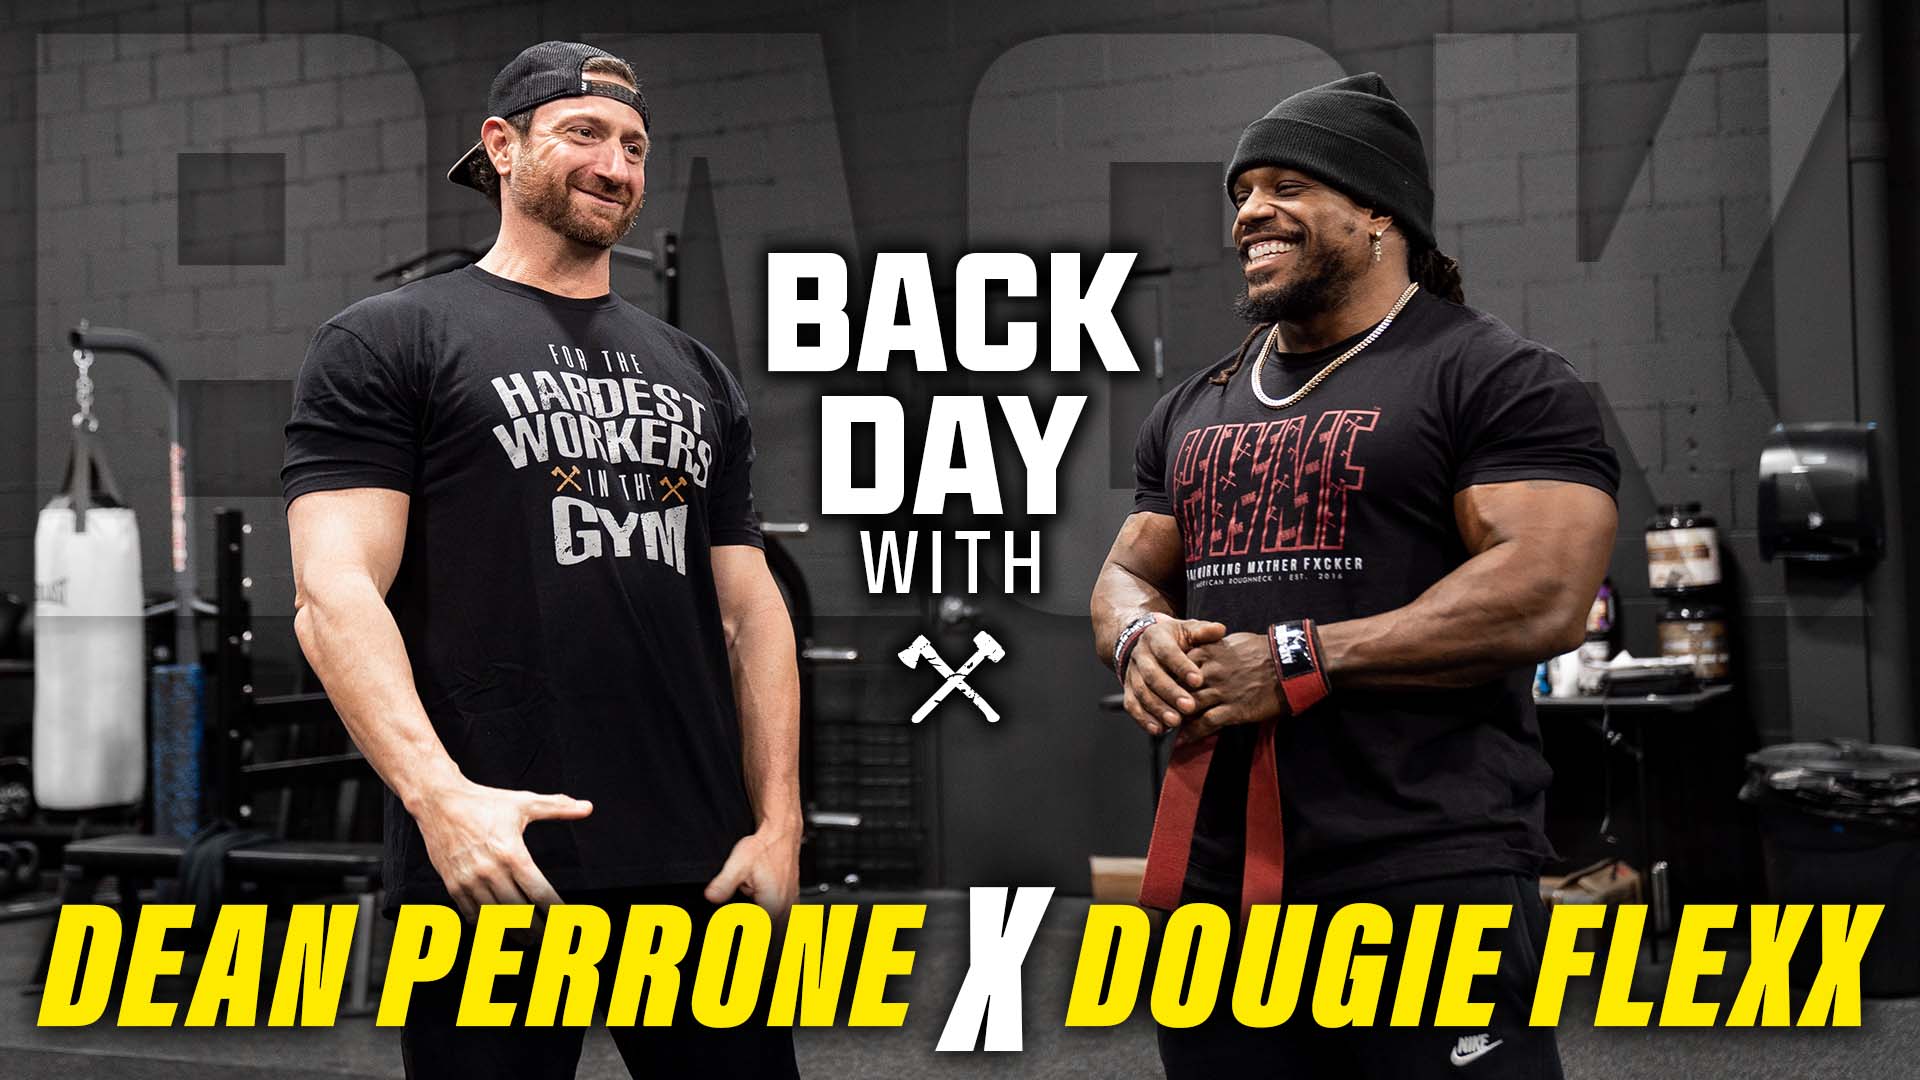 Olympia Level Back Workout | Dougie Flexx & Dean Perrone